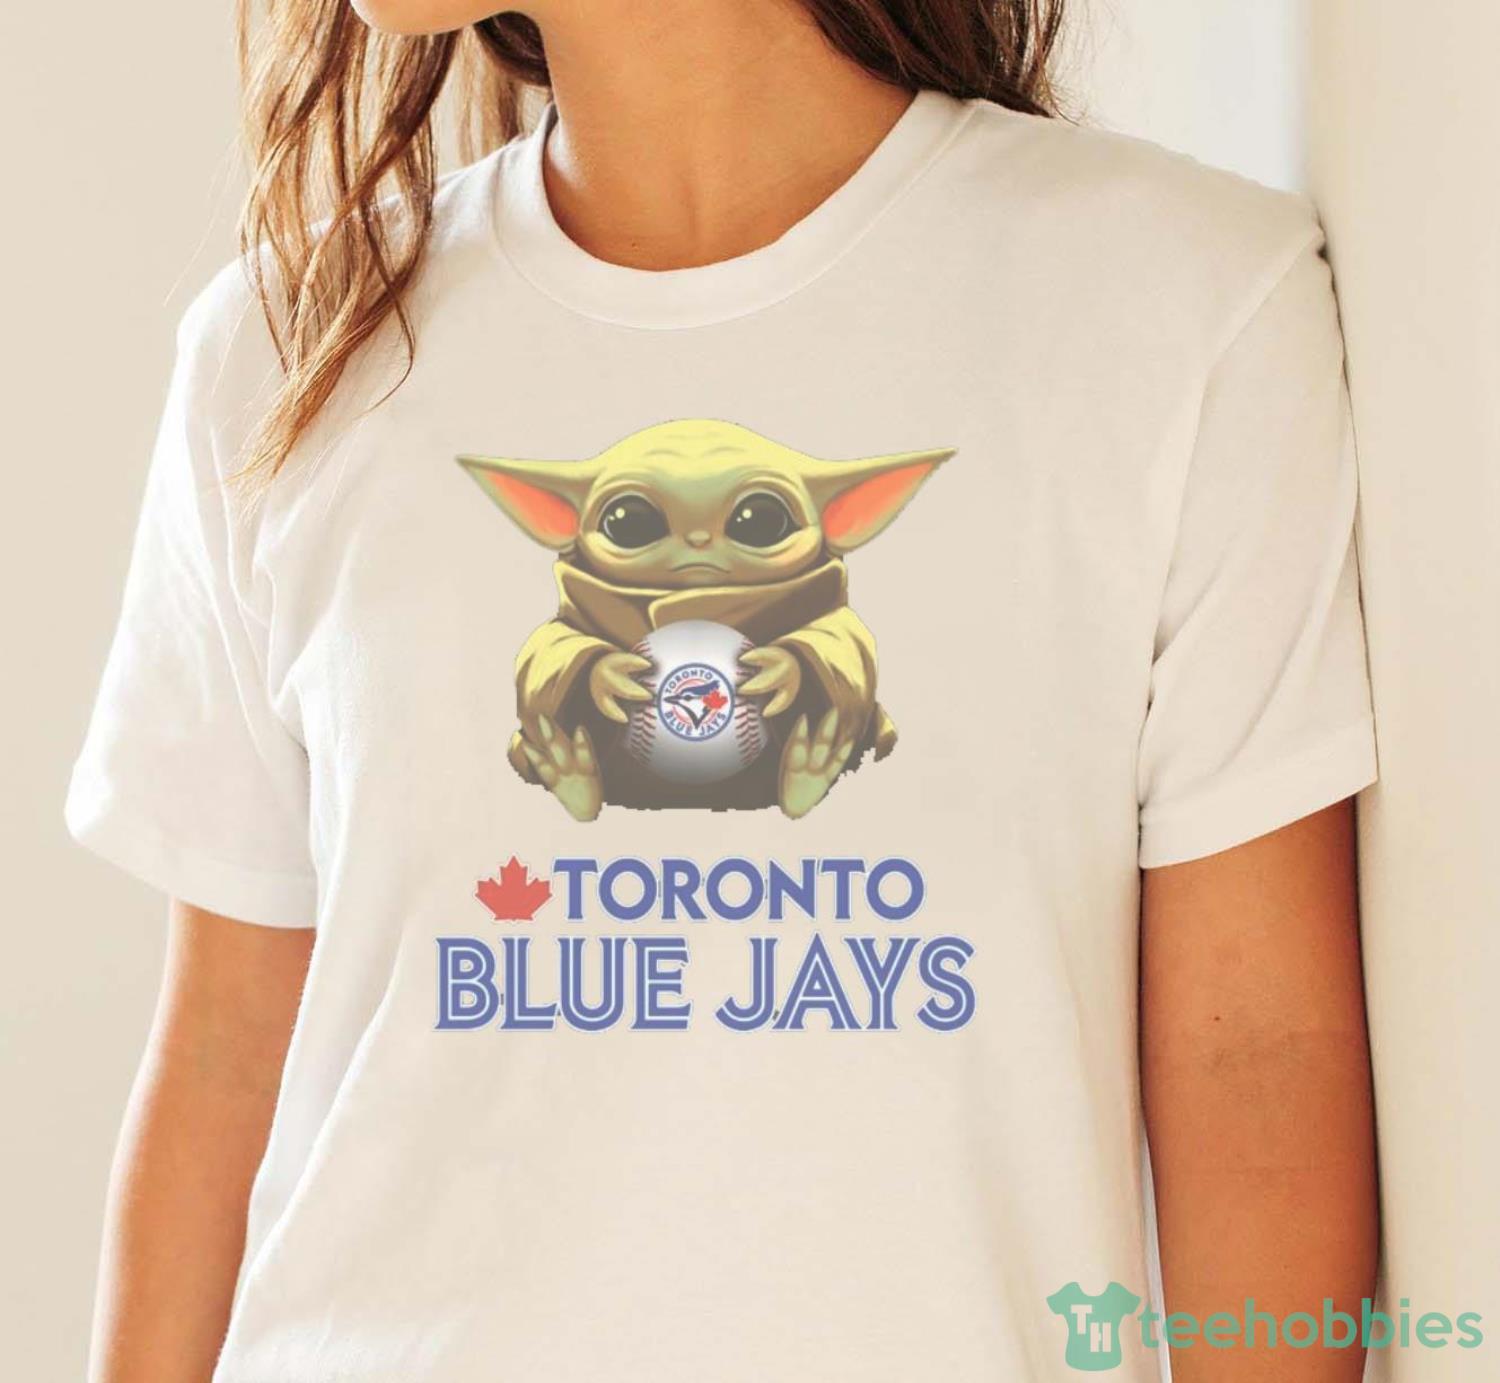 MLB Baseball Toronto Blue Jays Star Wars Baby Yoda Shirt T Shirt - White Ladies T-Shirt